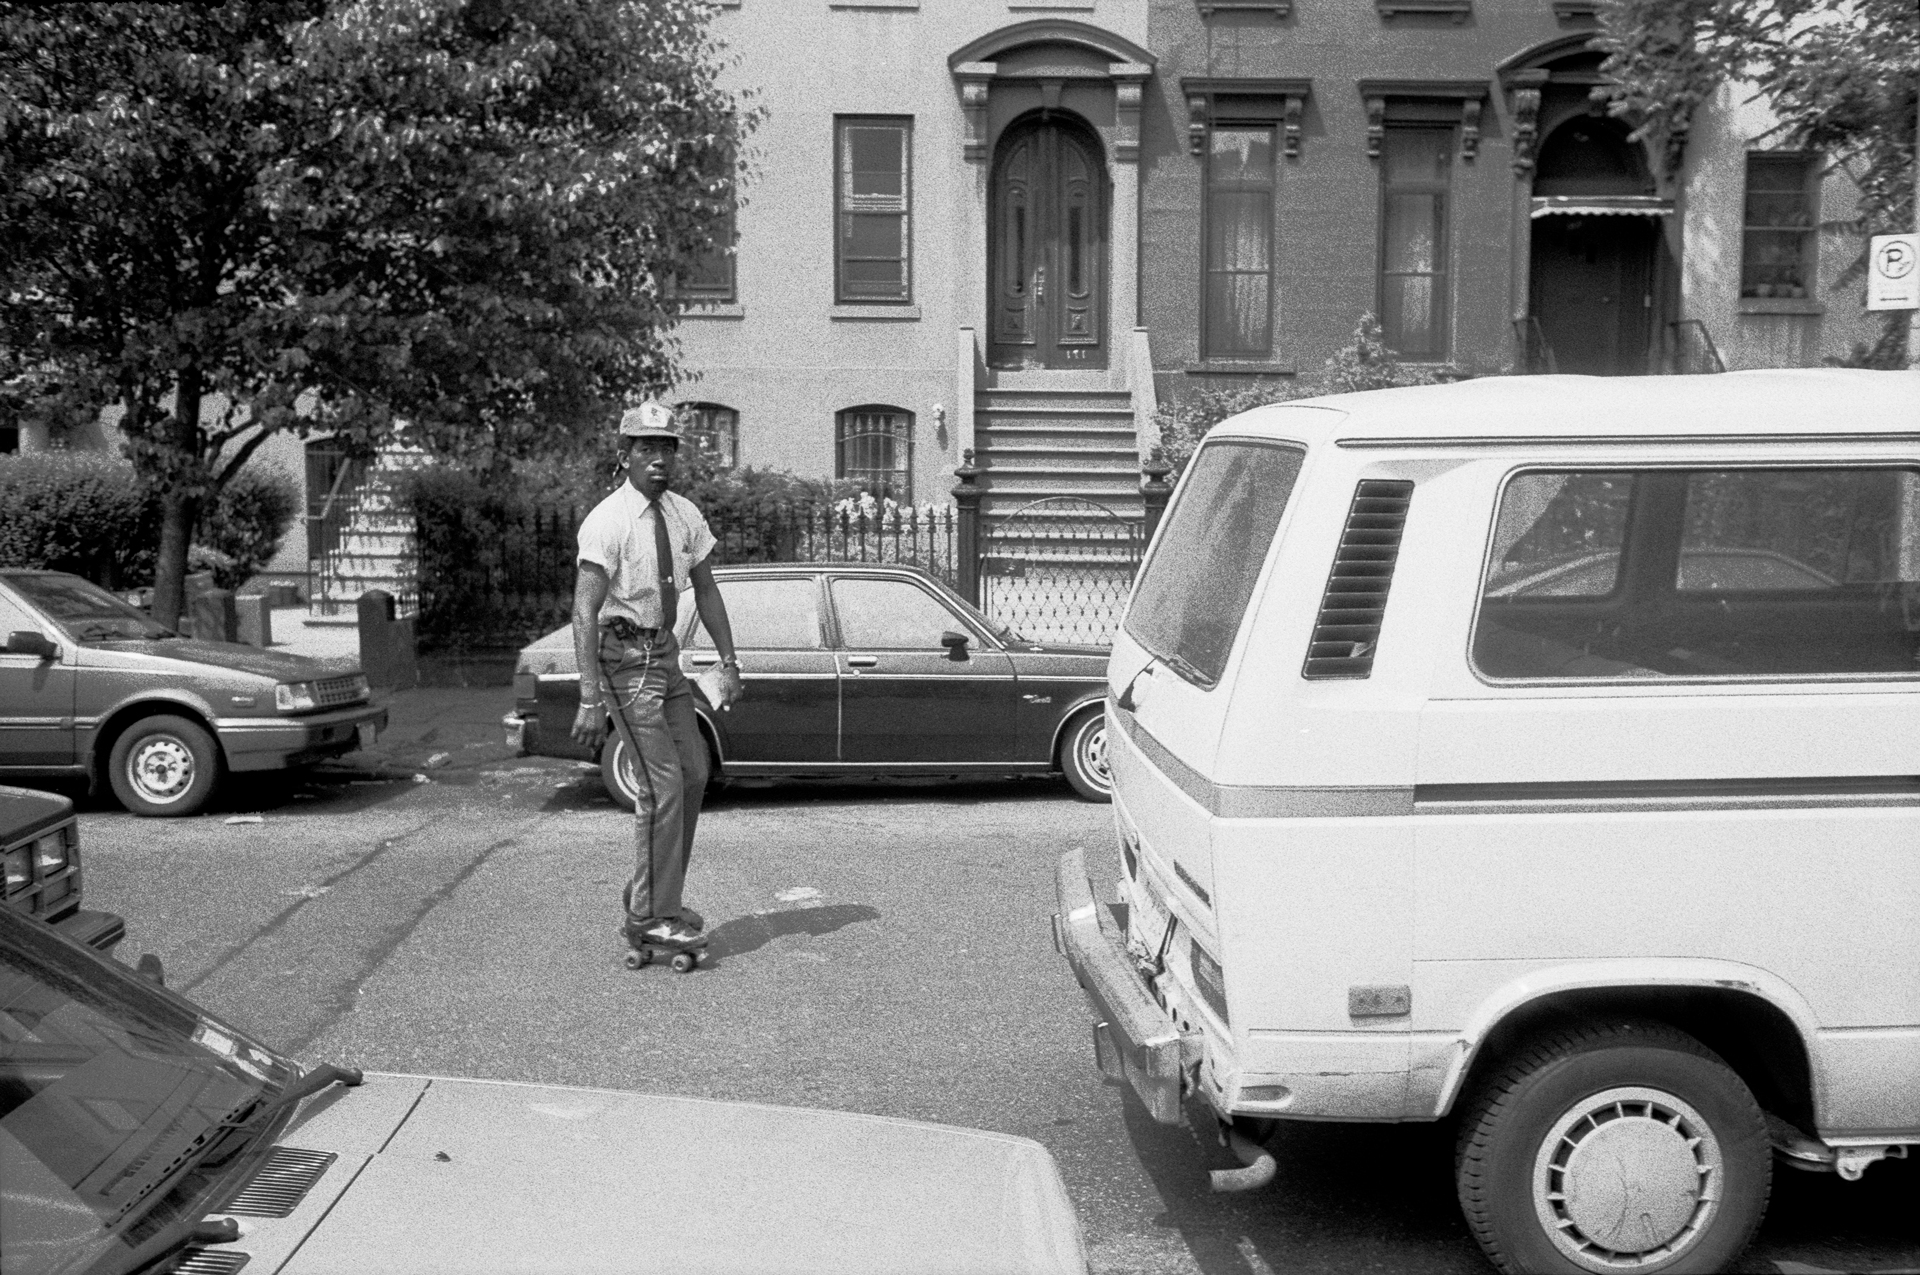 Postman on wheels, Brooklyn